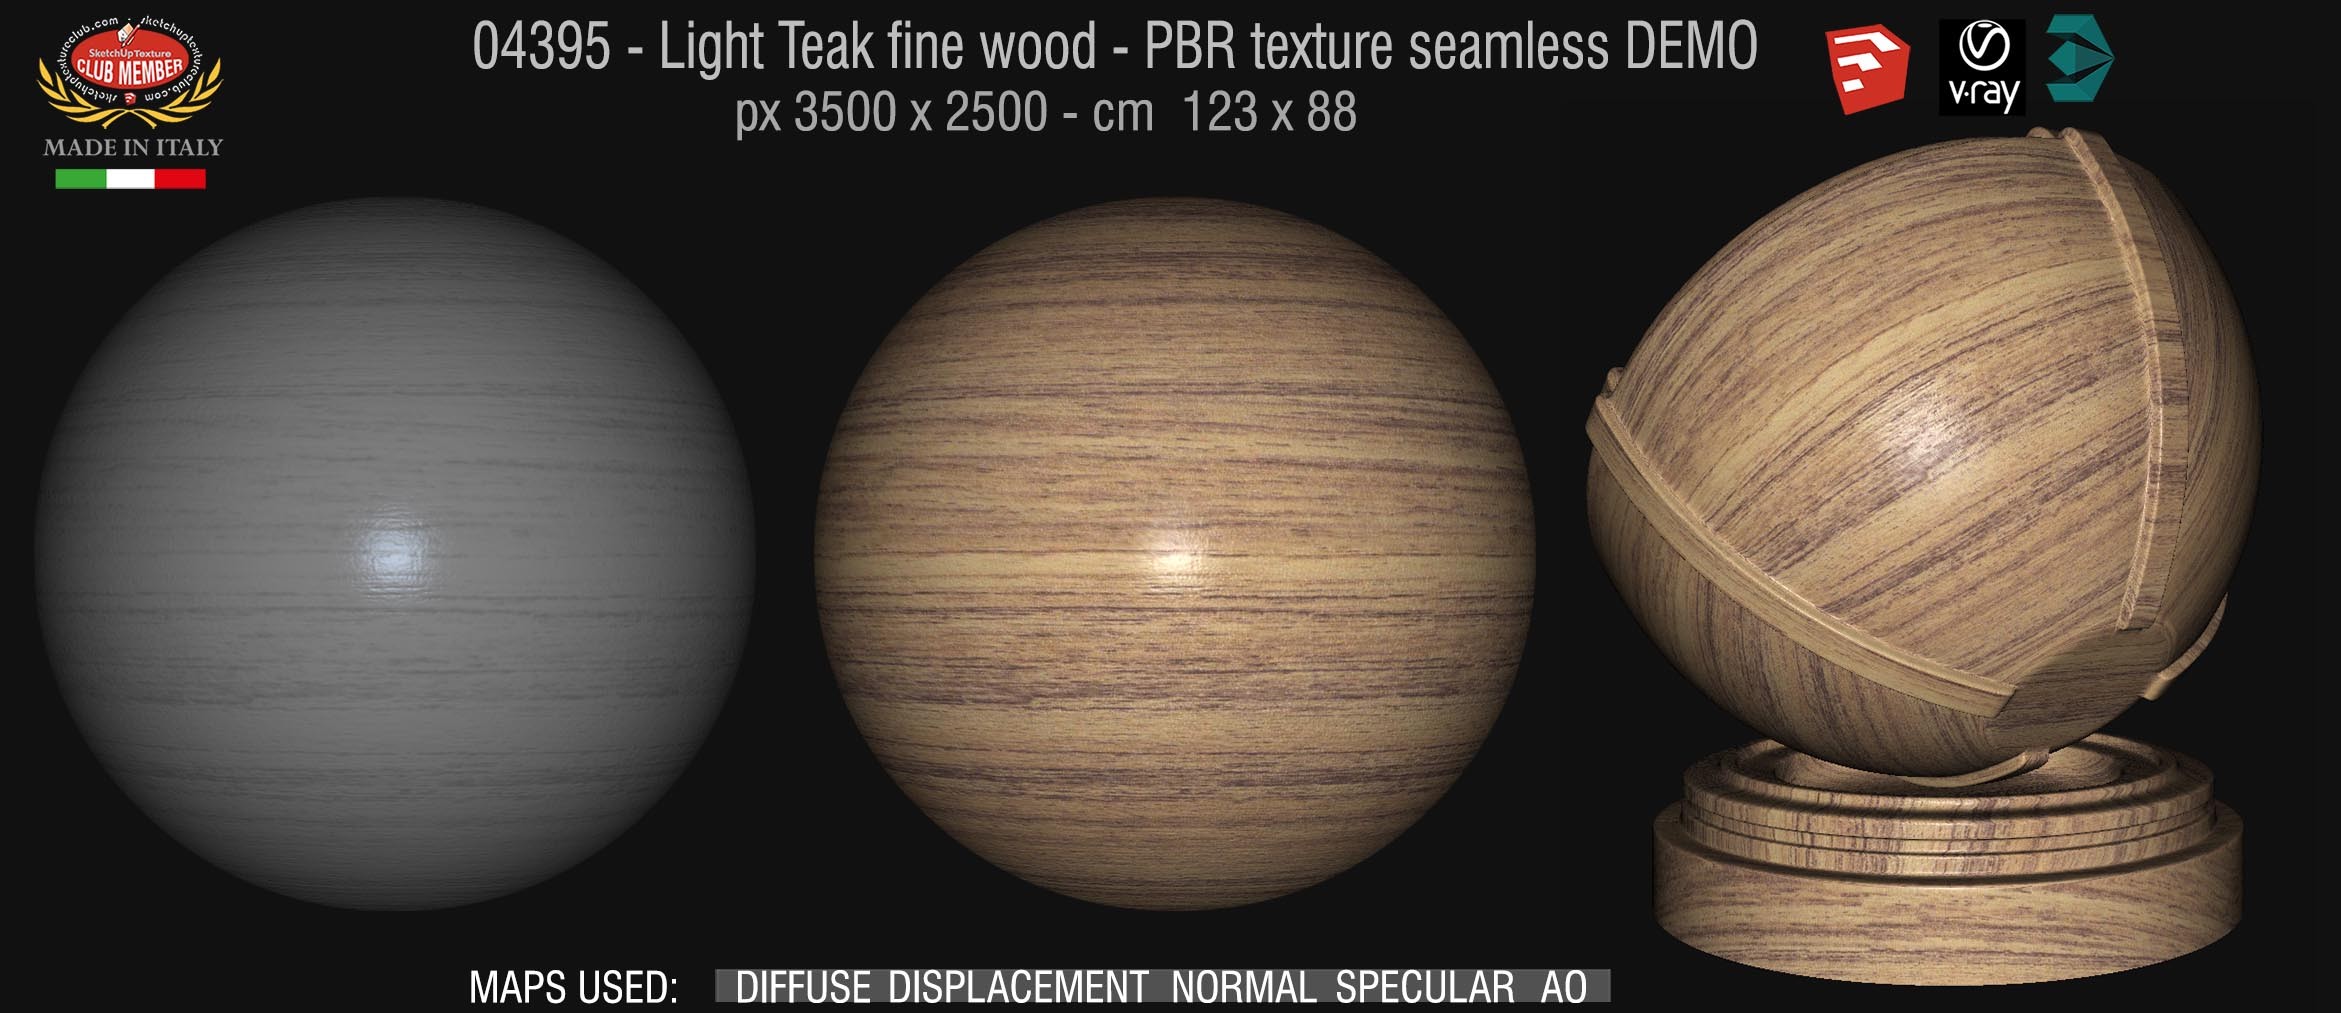 04395 Light Teak fine wood - PBR texture seamless DEMO